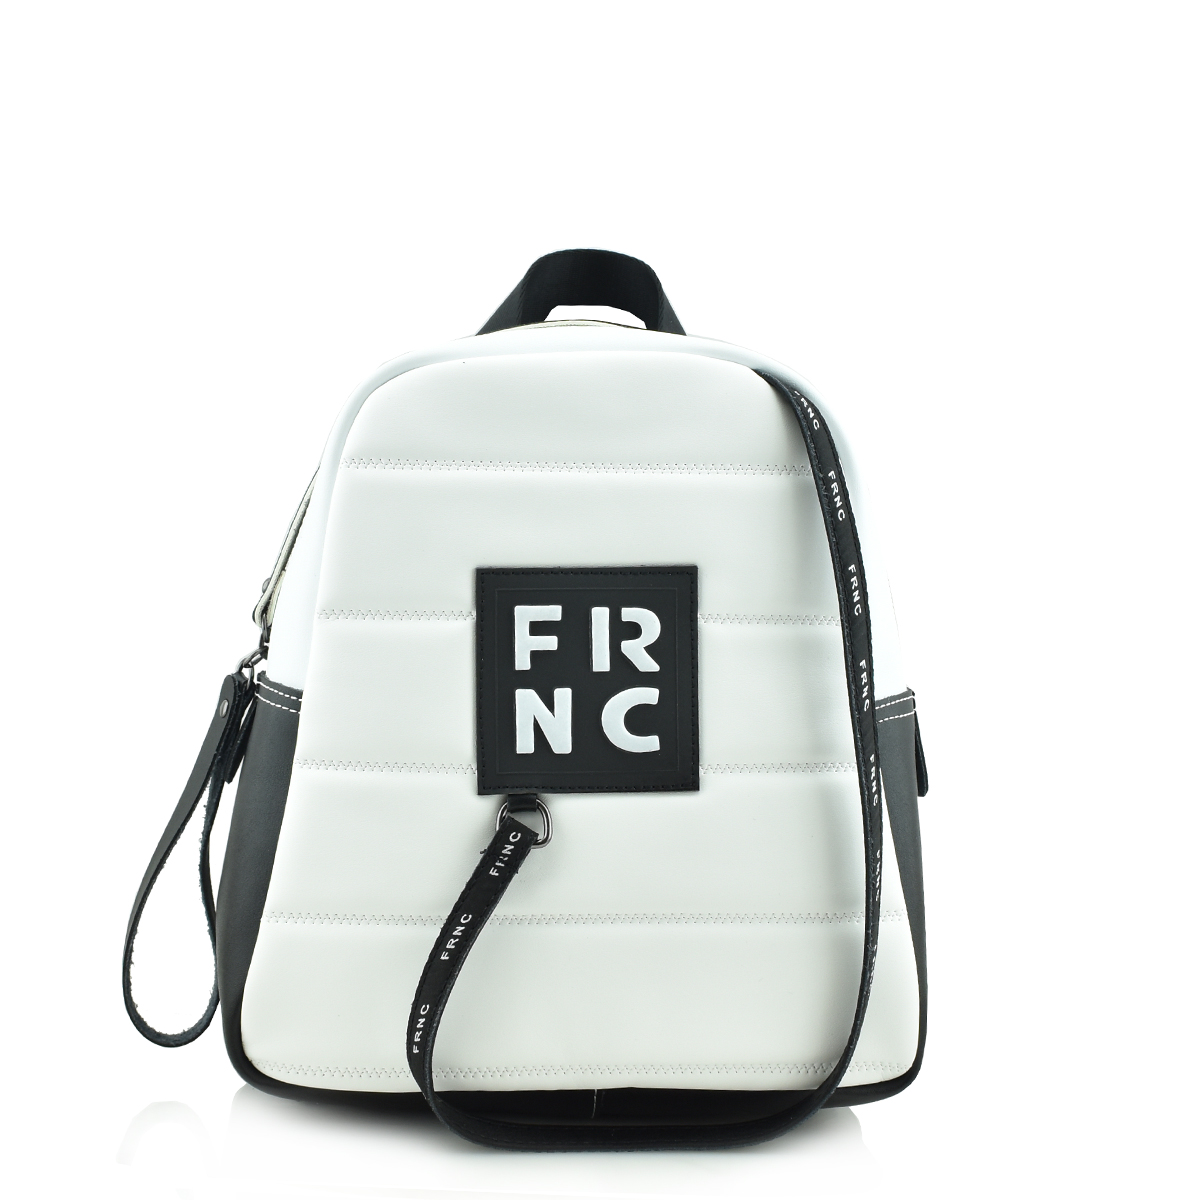 FRNC - FRANCESCO CLASSIC MINI DOUBLE COLOR BACKPACK - 2131 WHITE